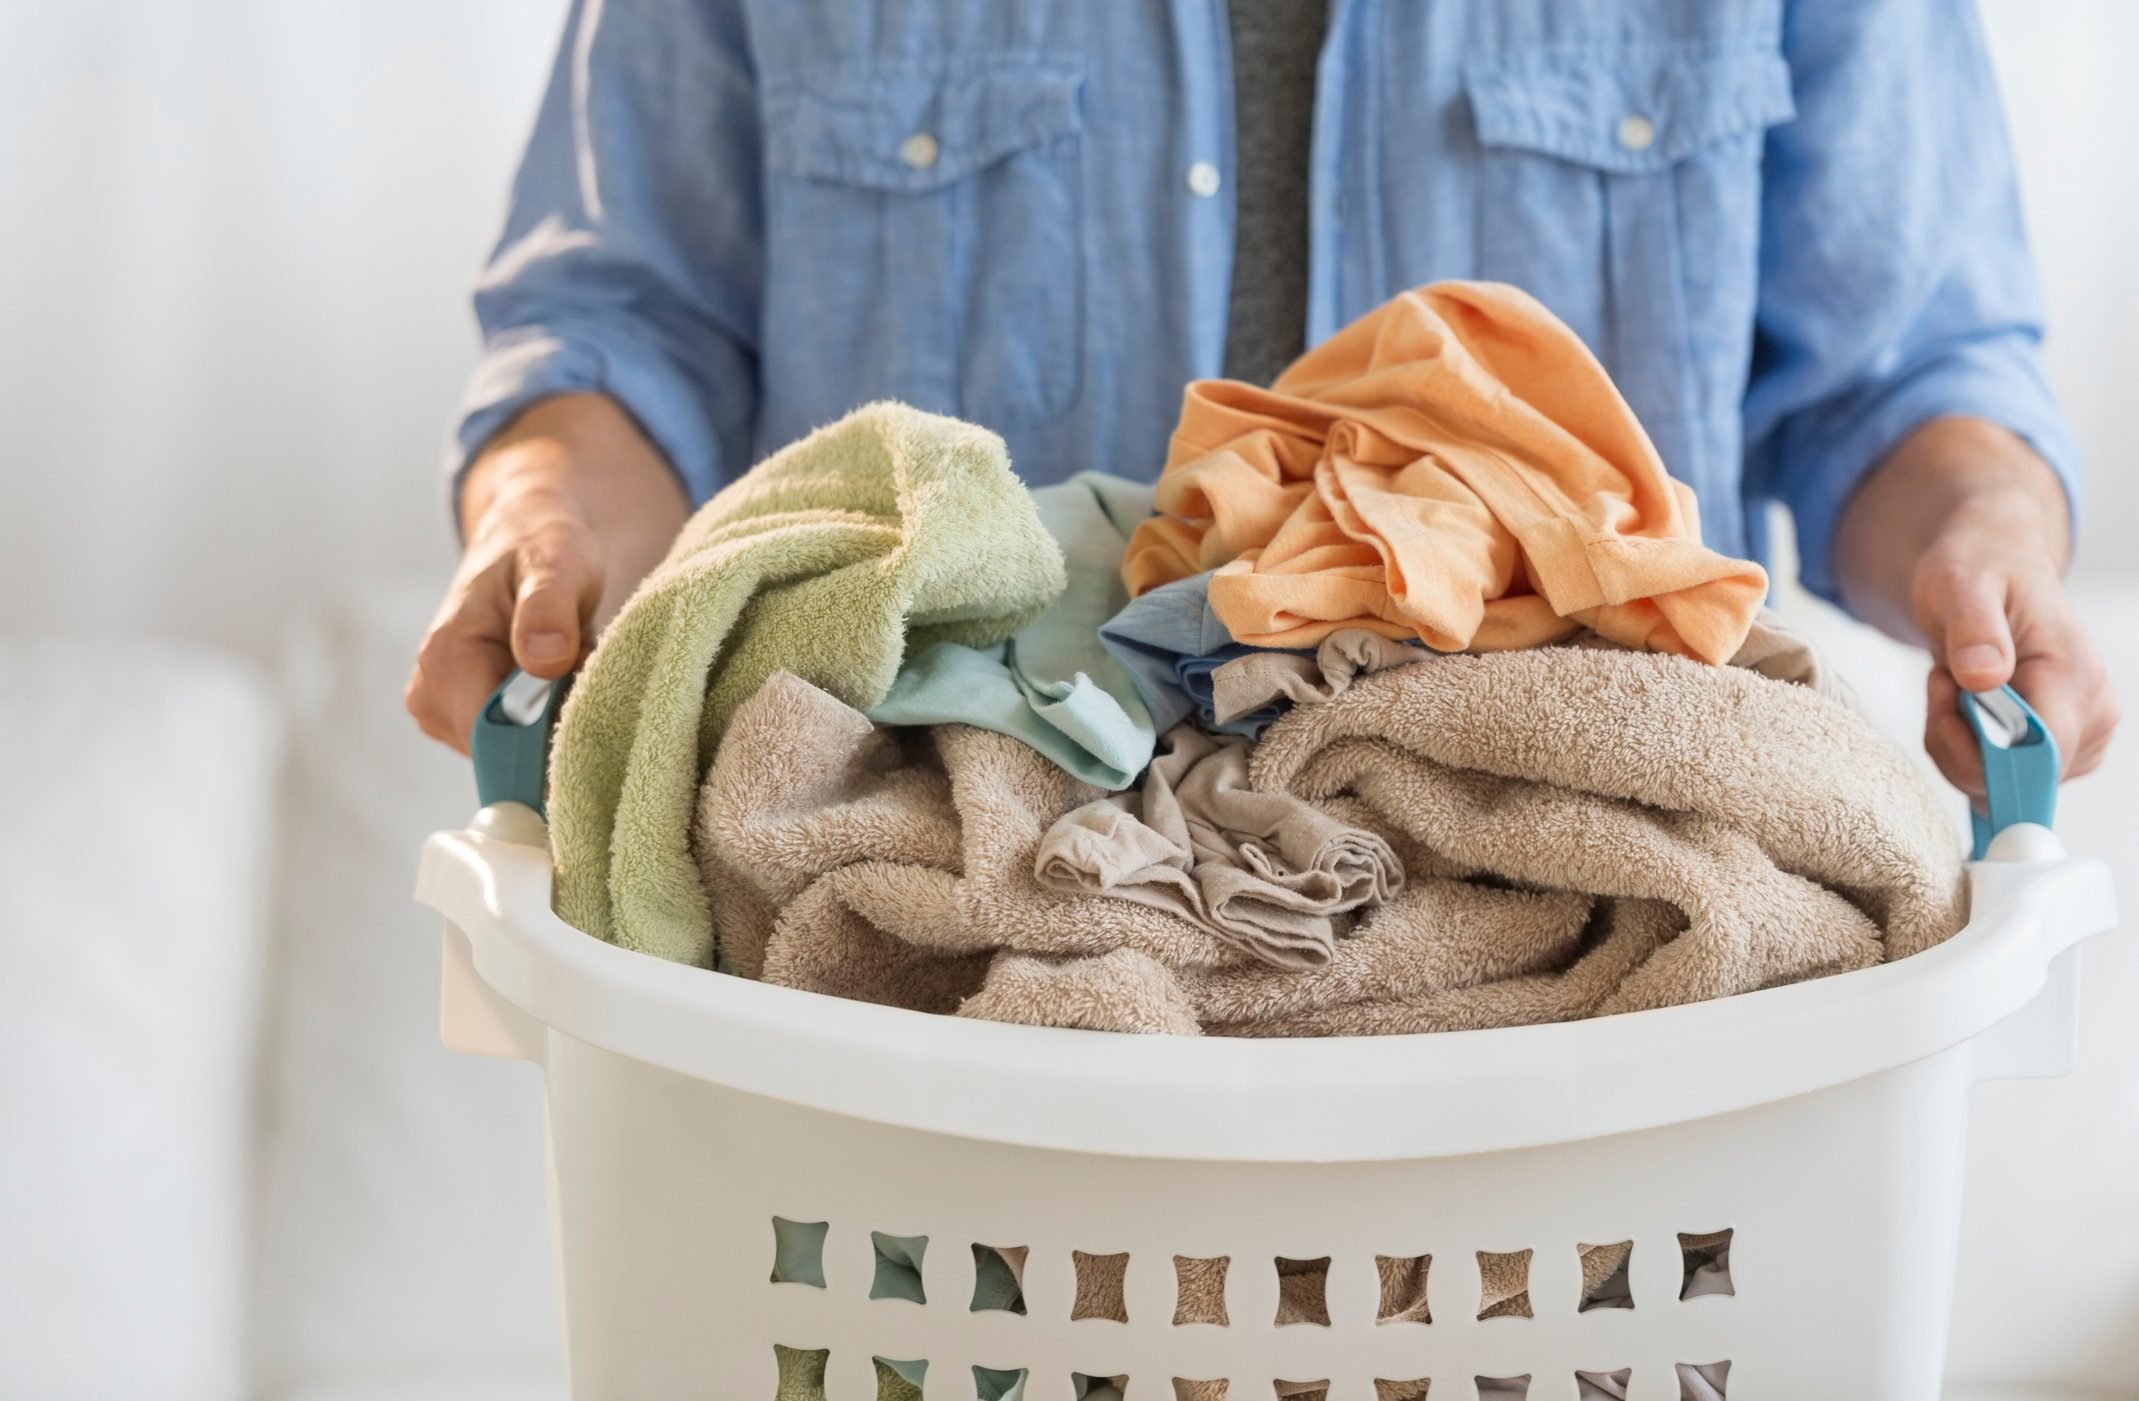 Does Washing Clothes Protect Against Coronavirus?